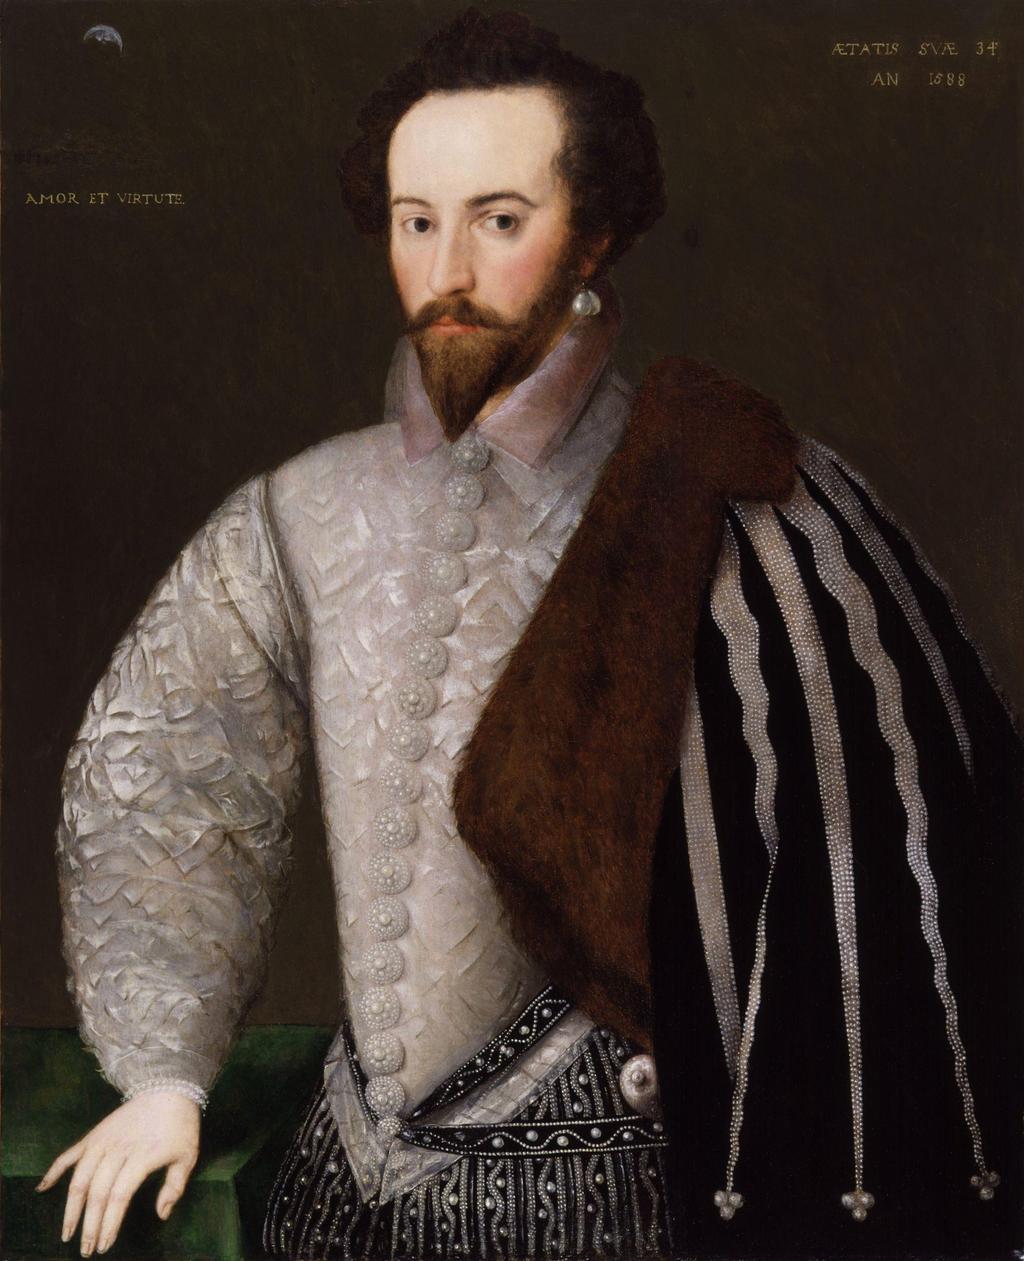 Between 1584 and 1589, he helped establish a colony near Roanoke Island (present-day Sir Humphrey Gilbert Sir Walter Raleigh North Carolina), which he named Virginia.